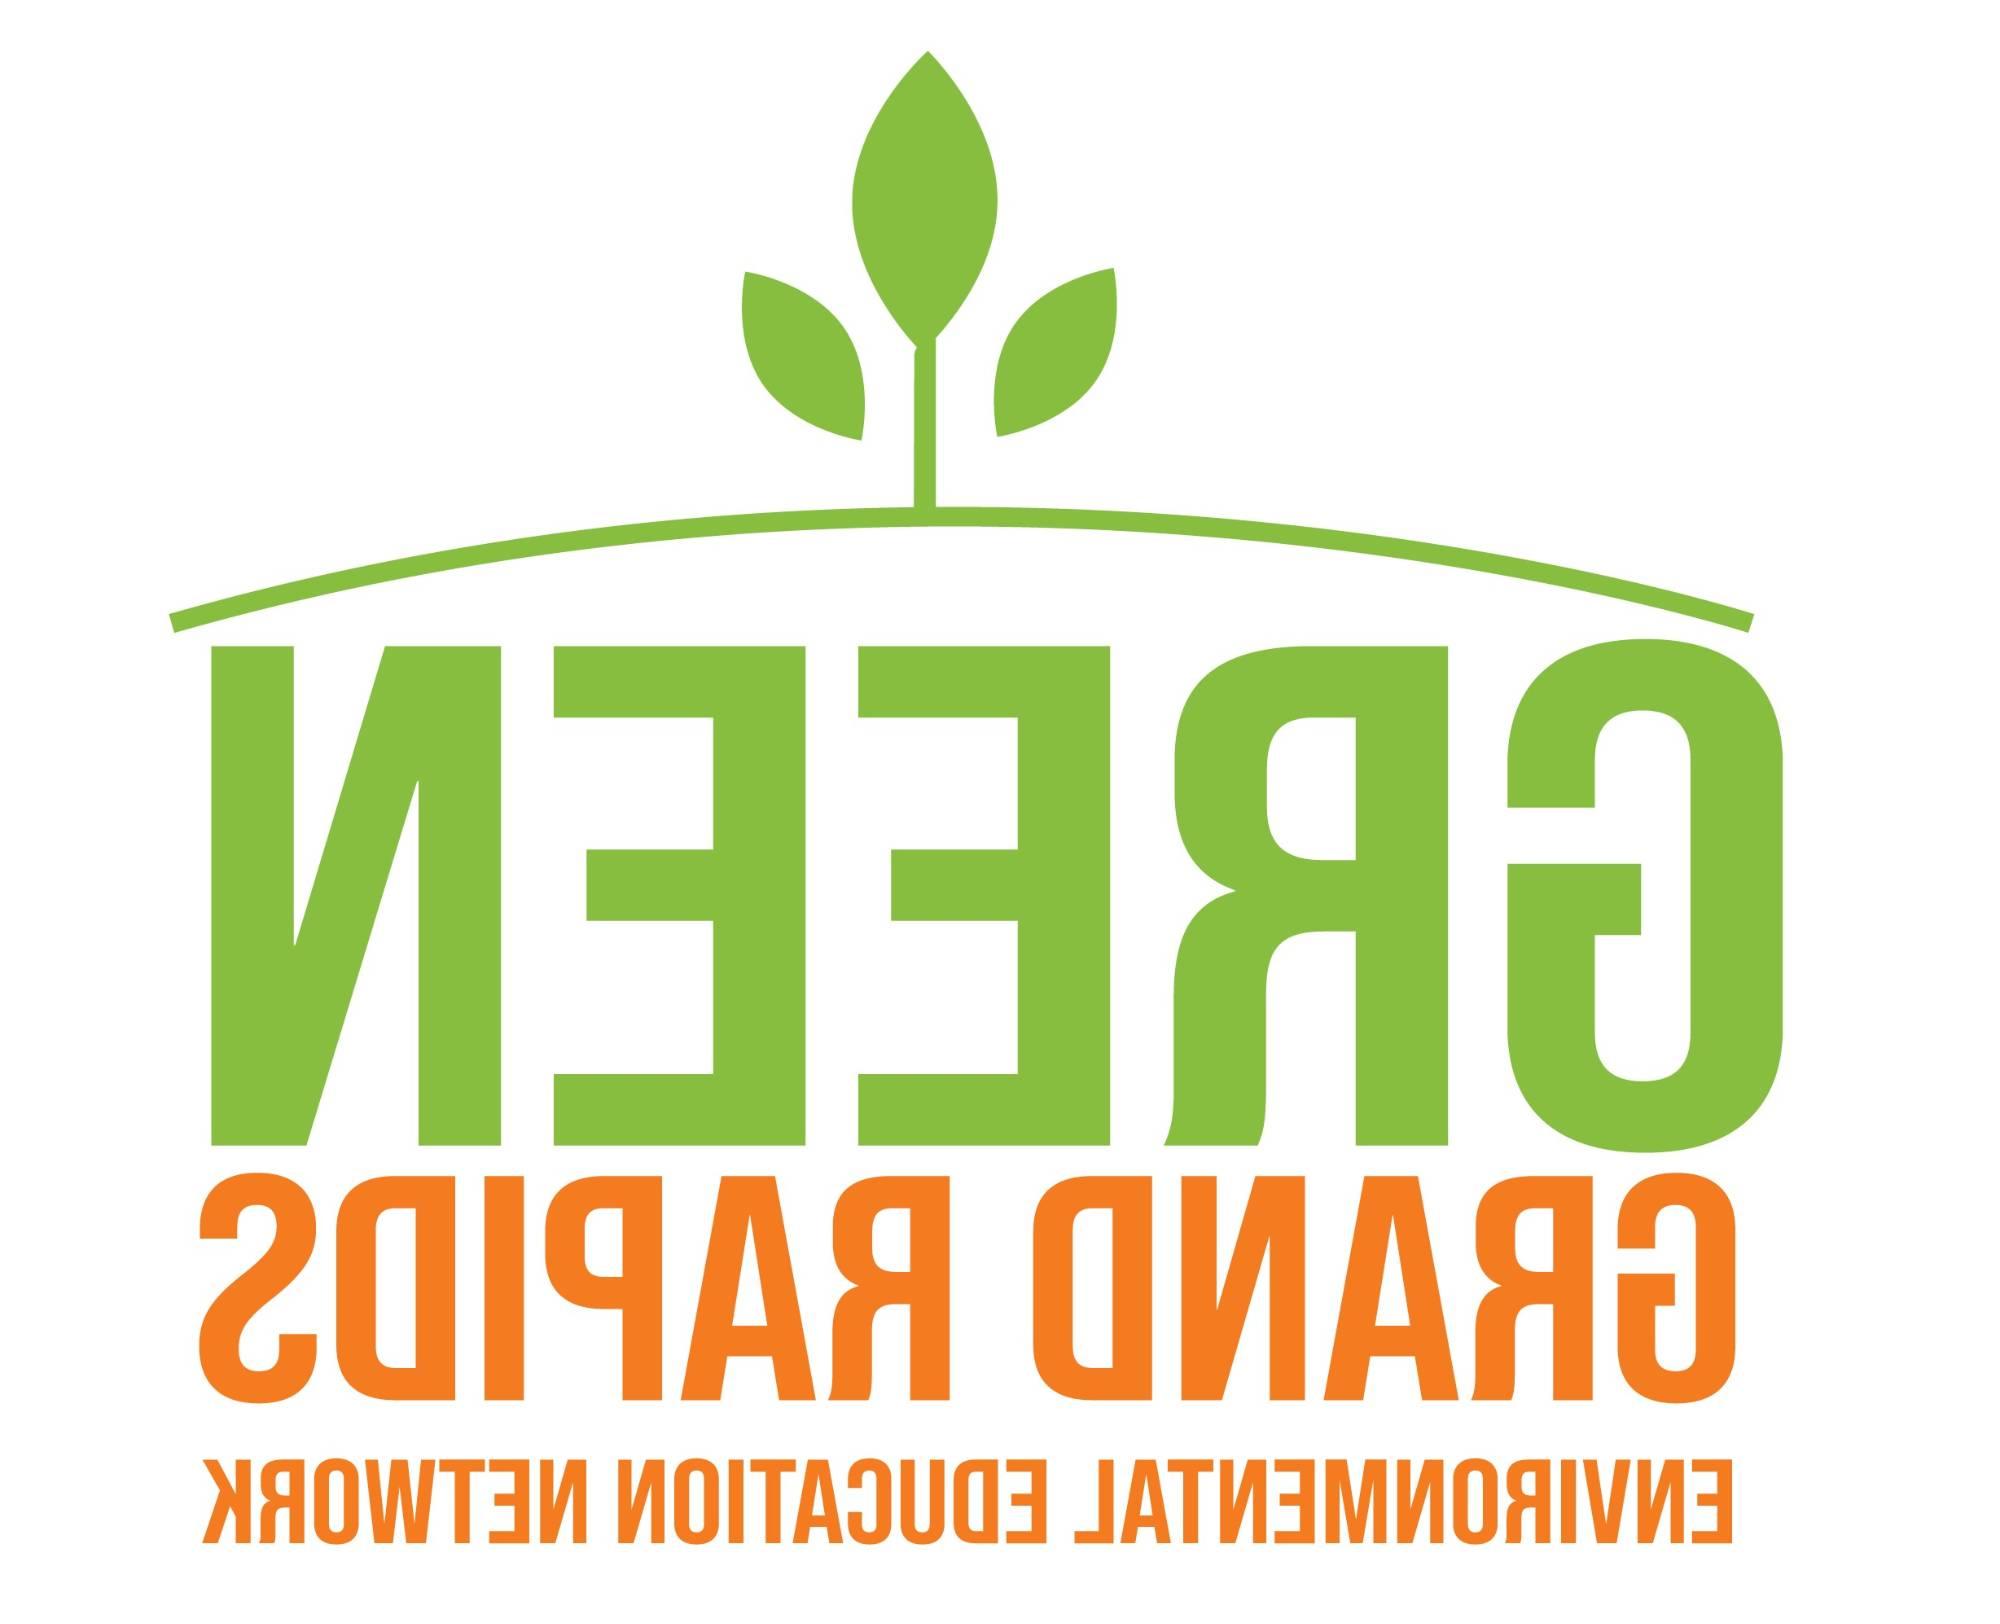 GREEN Grand Rapids Environmental Education Network logo